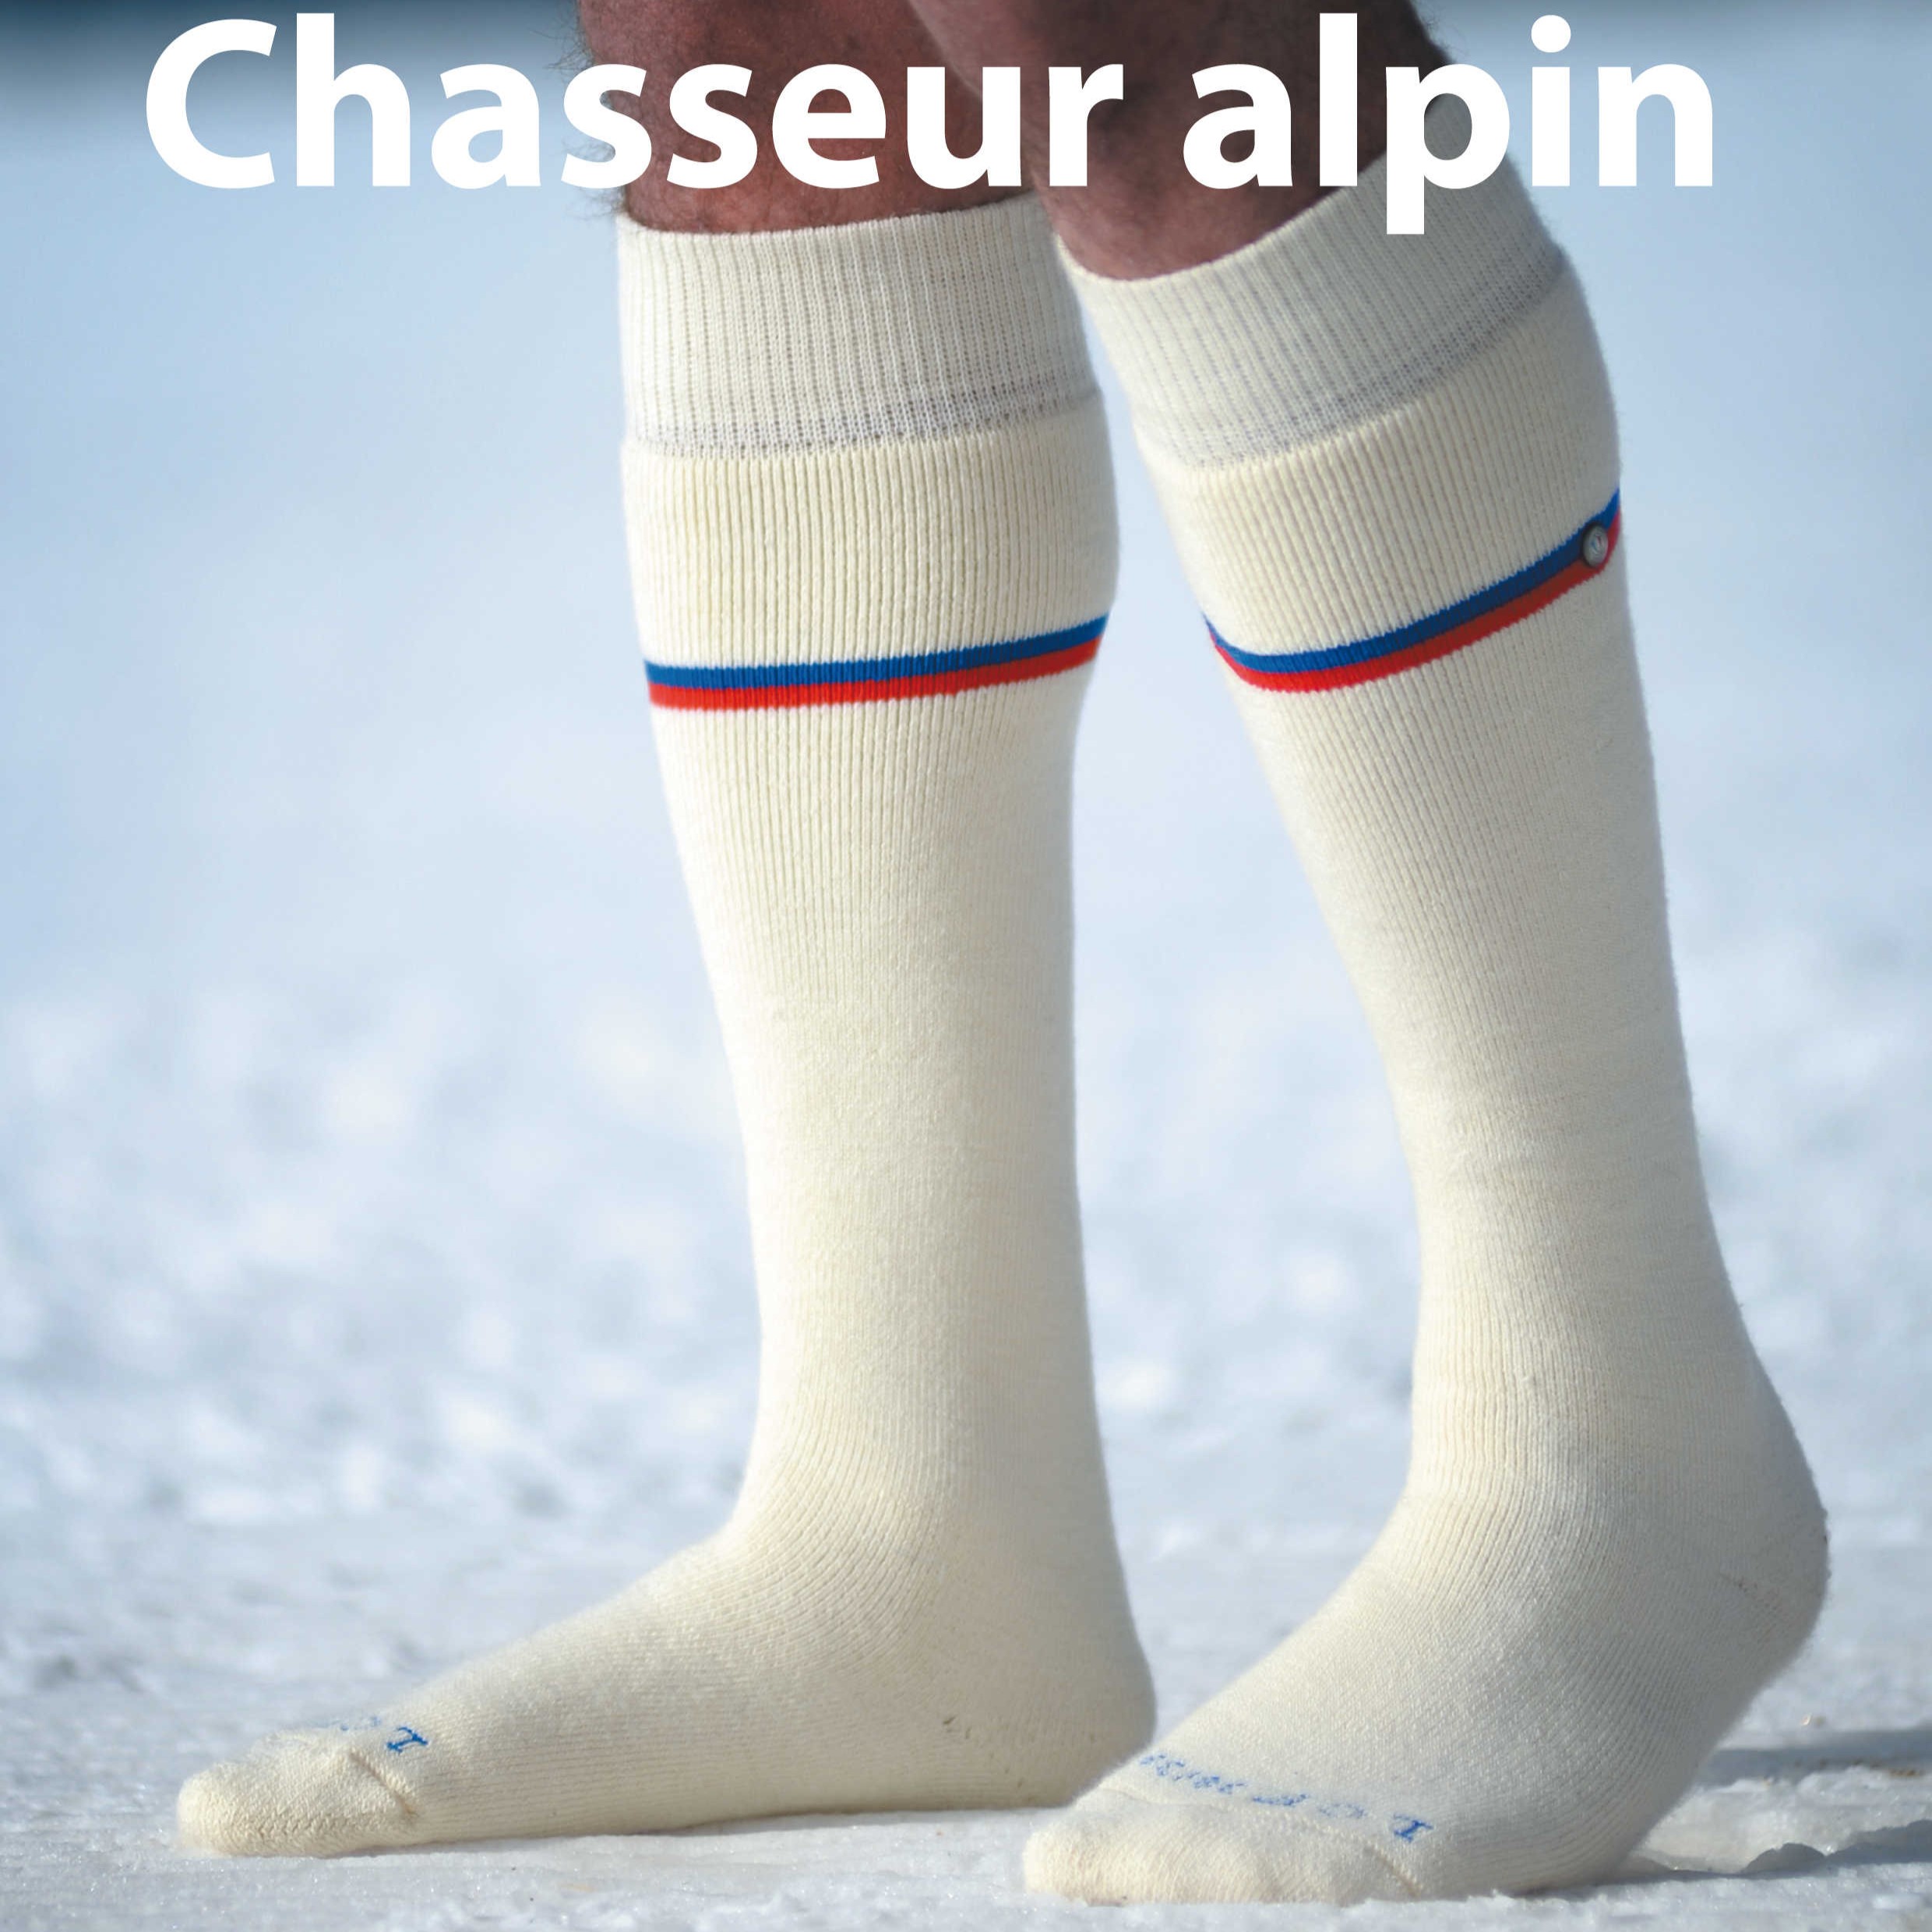 Chasseur Alpin